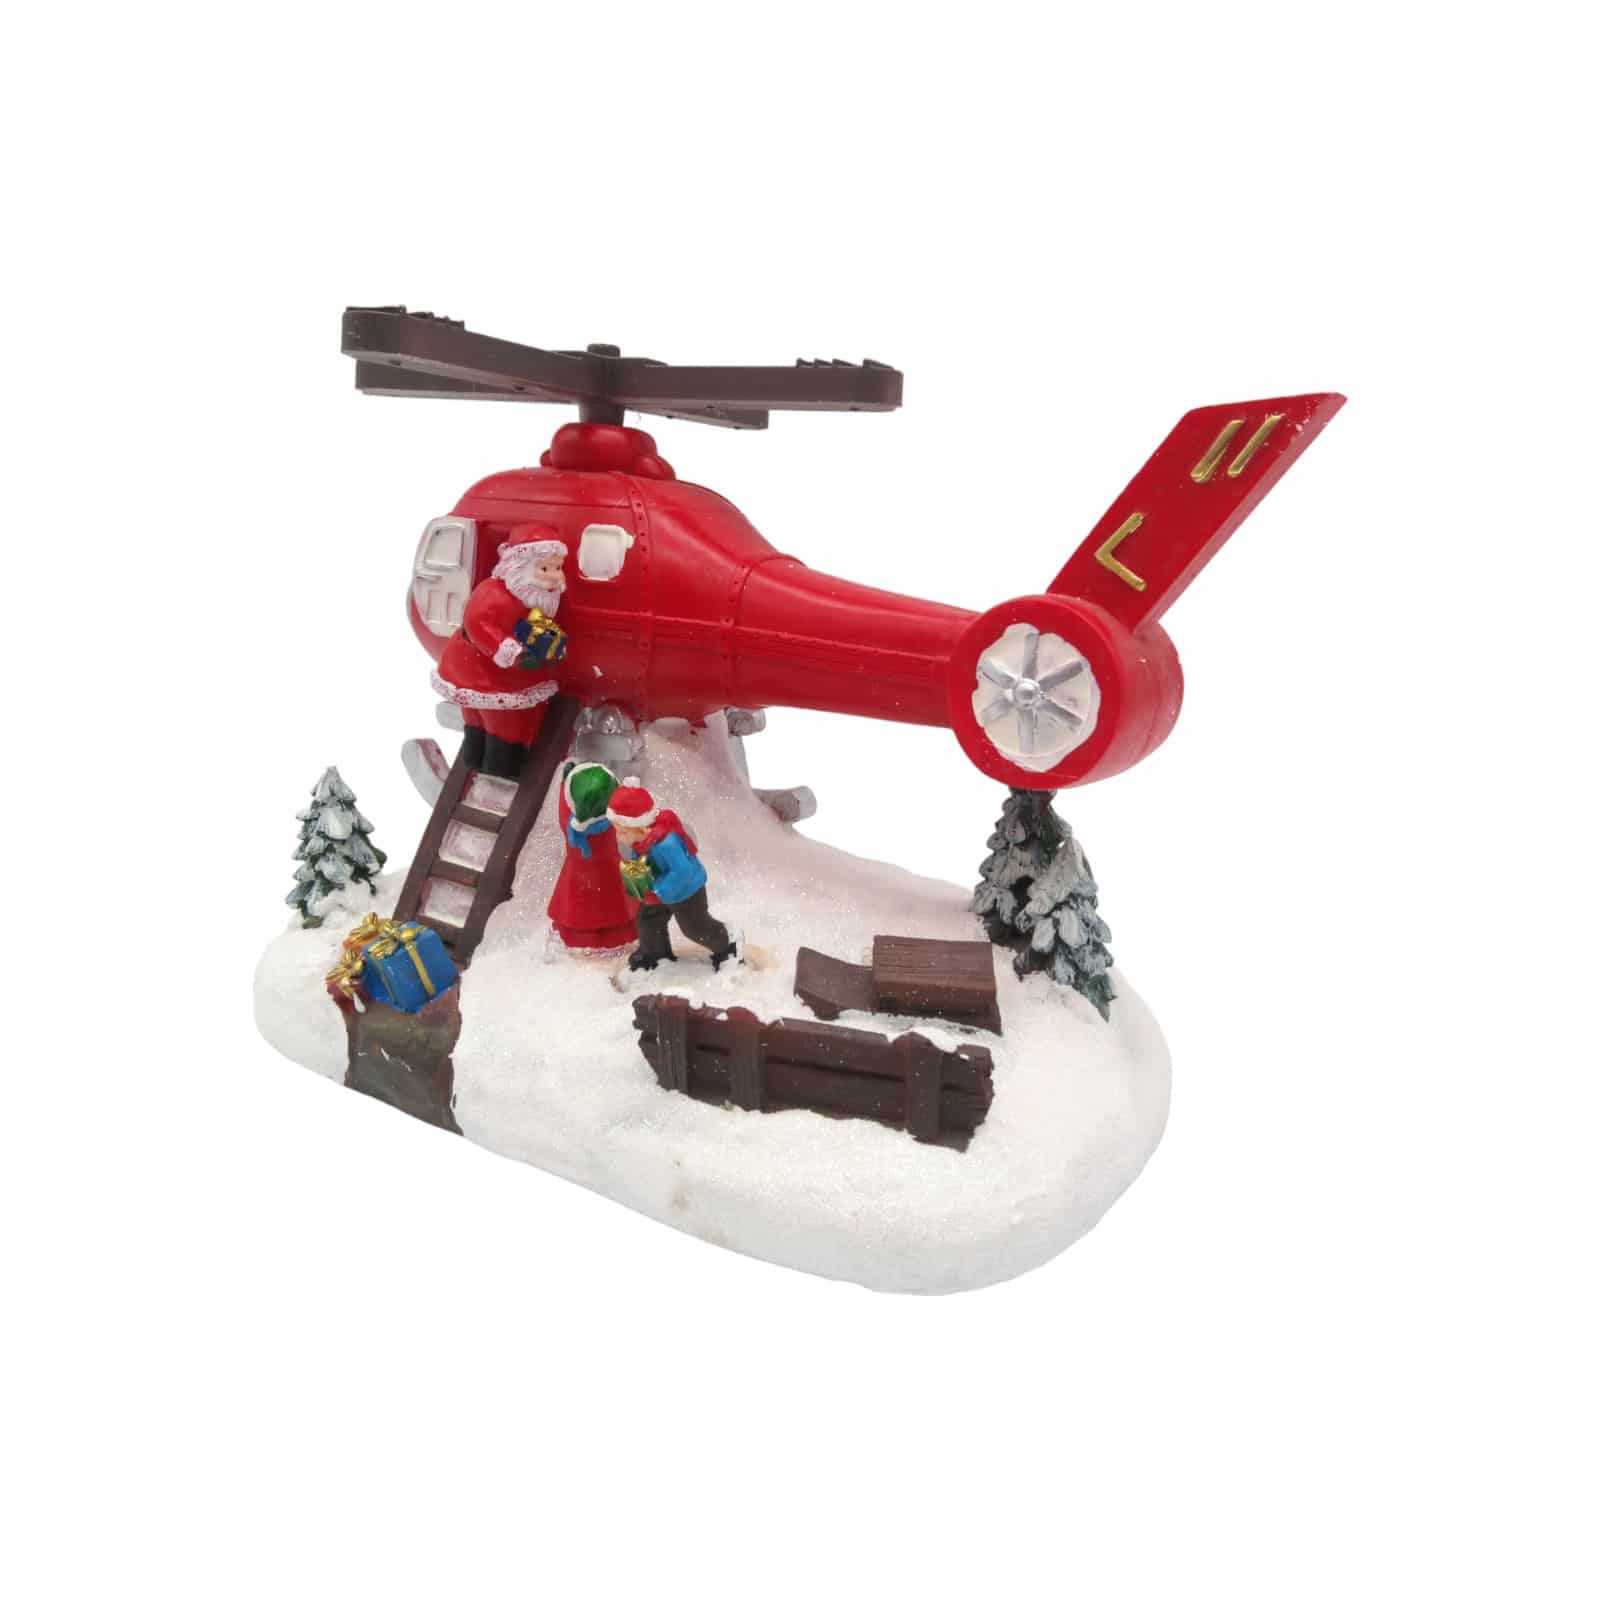 LED-Weihnachtsszene "Santa mit Helikopter"